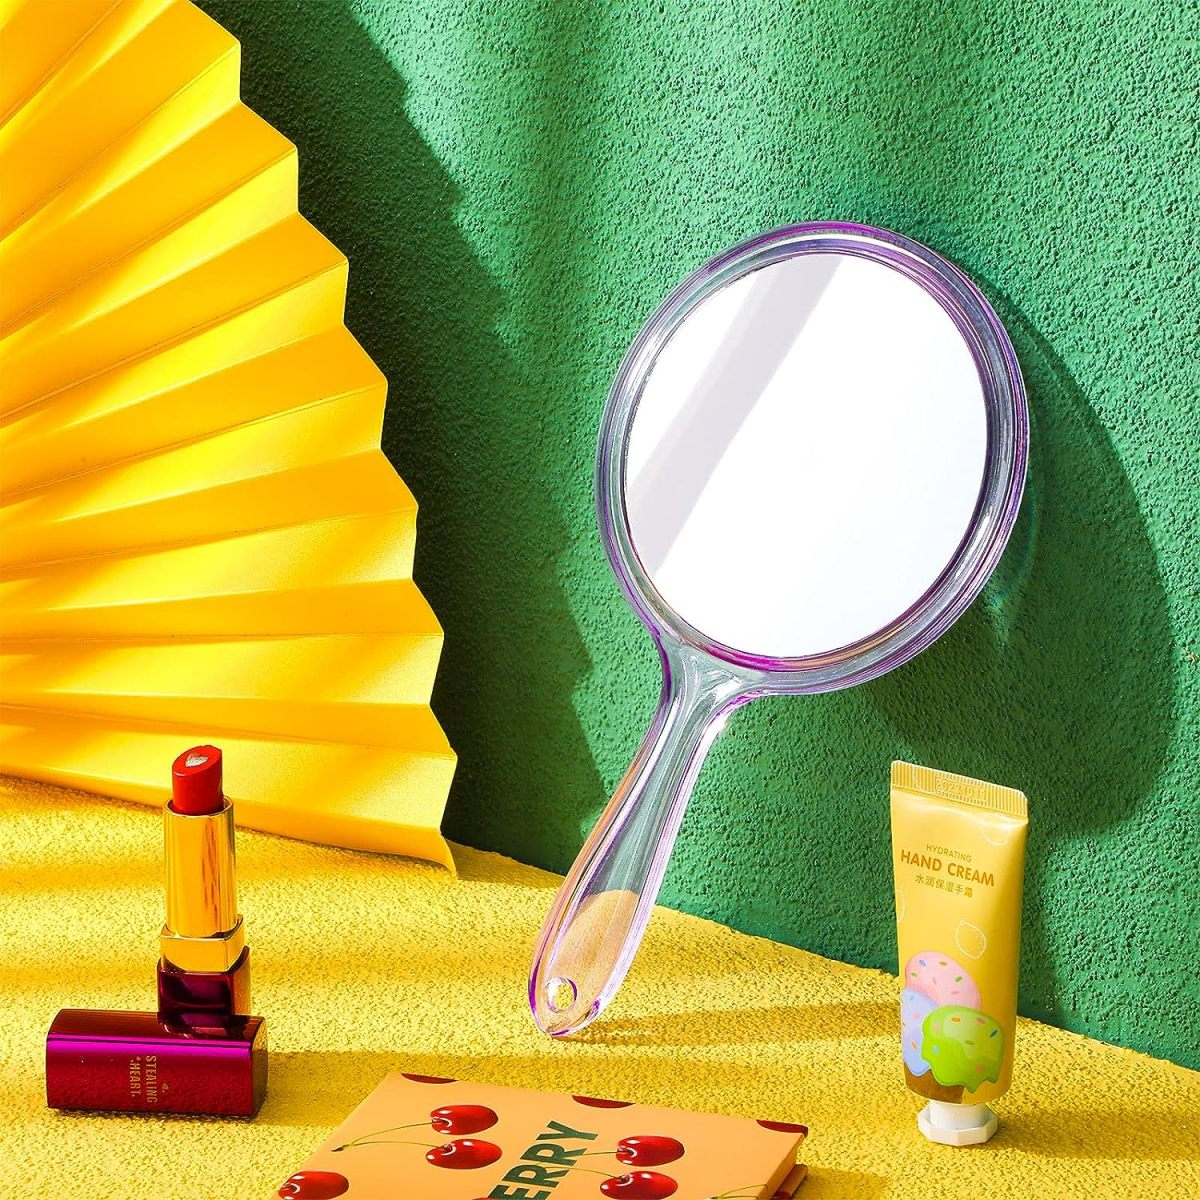 ELKUAIE Griff transparent Kosmetikspiegel Doppelspiegel